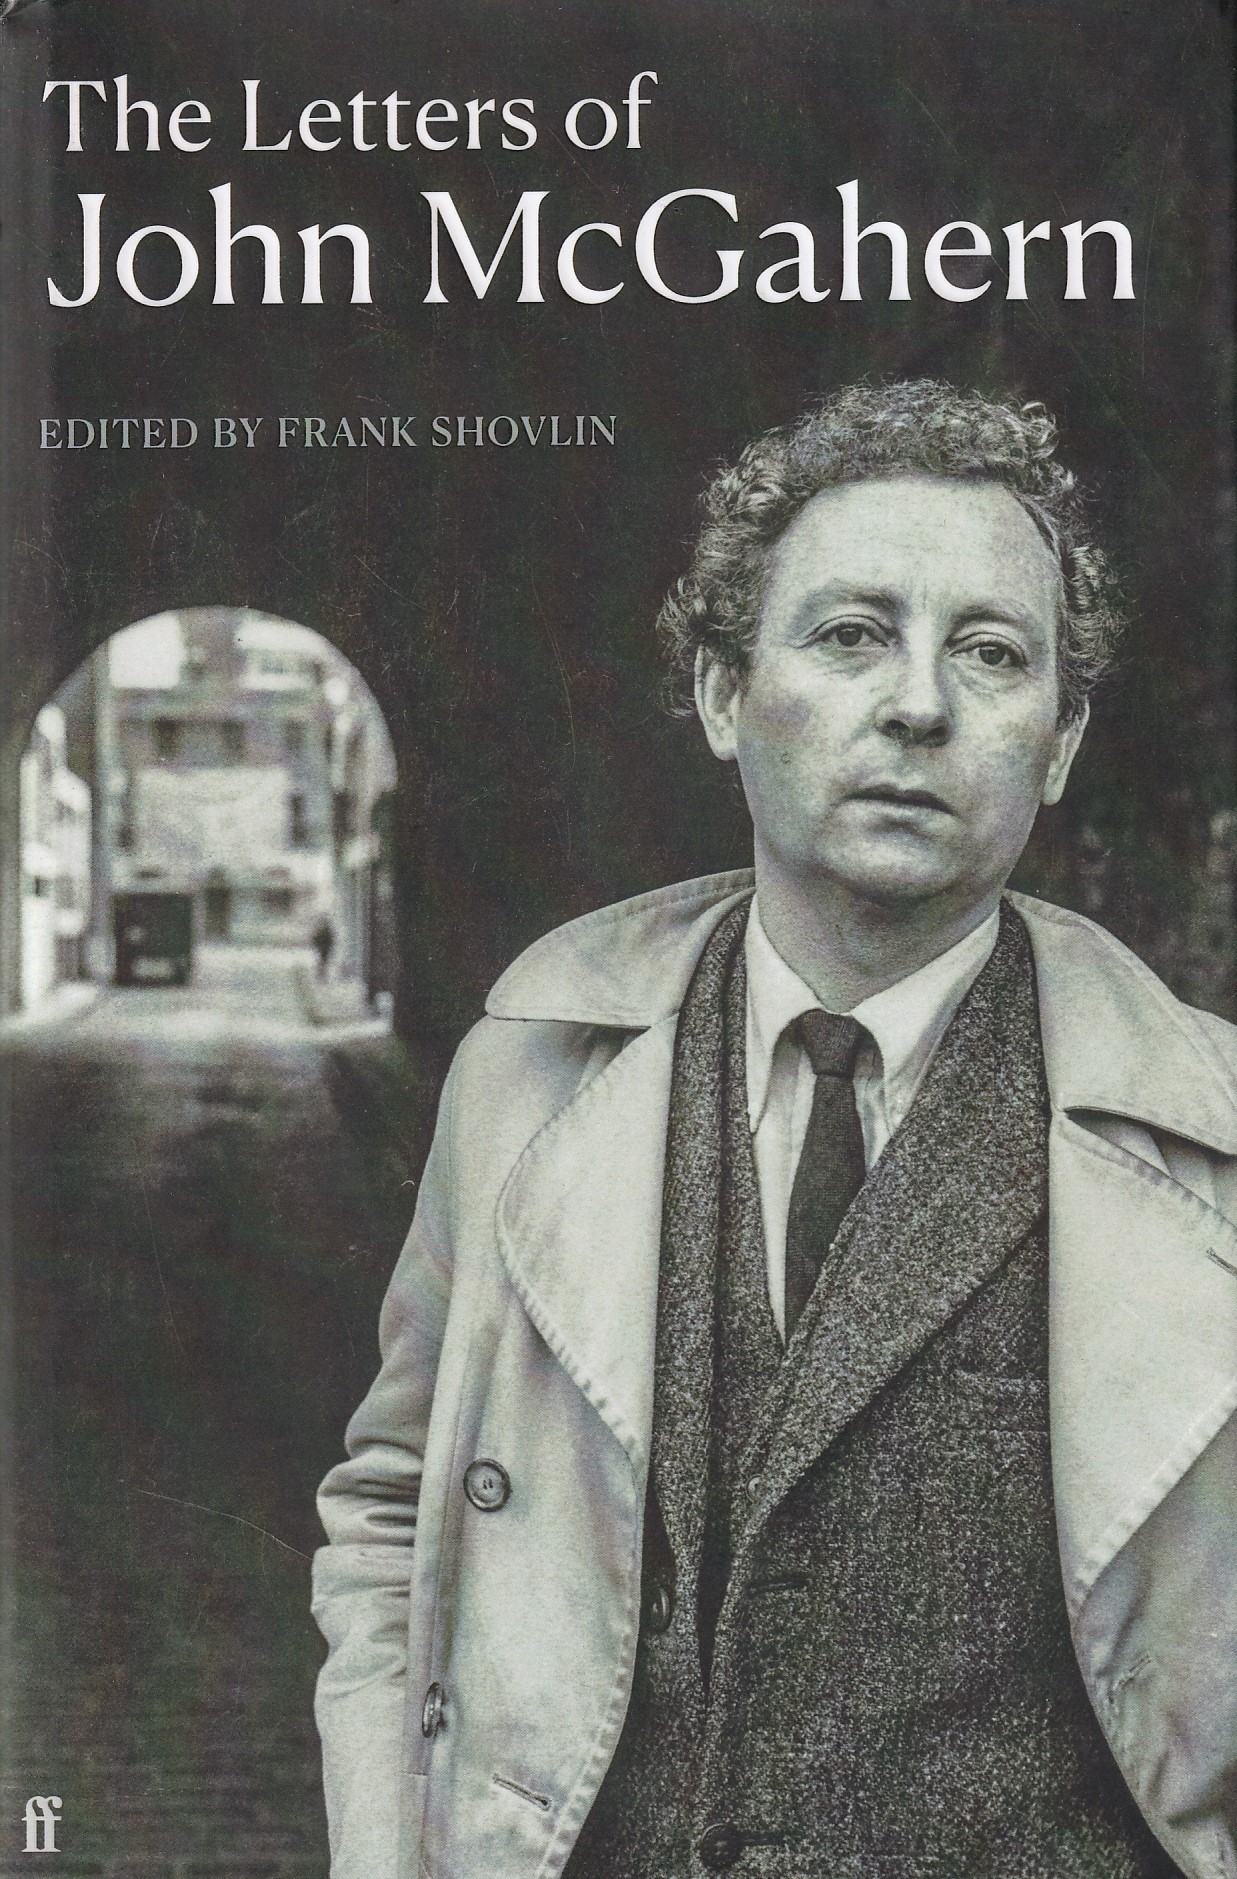 The Letters of John McGahern by John McGahern (ed. Frank Shovlin)